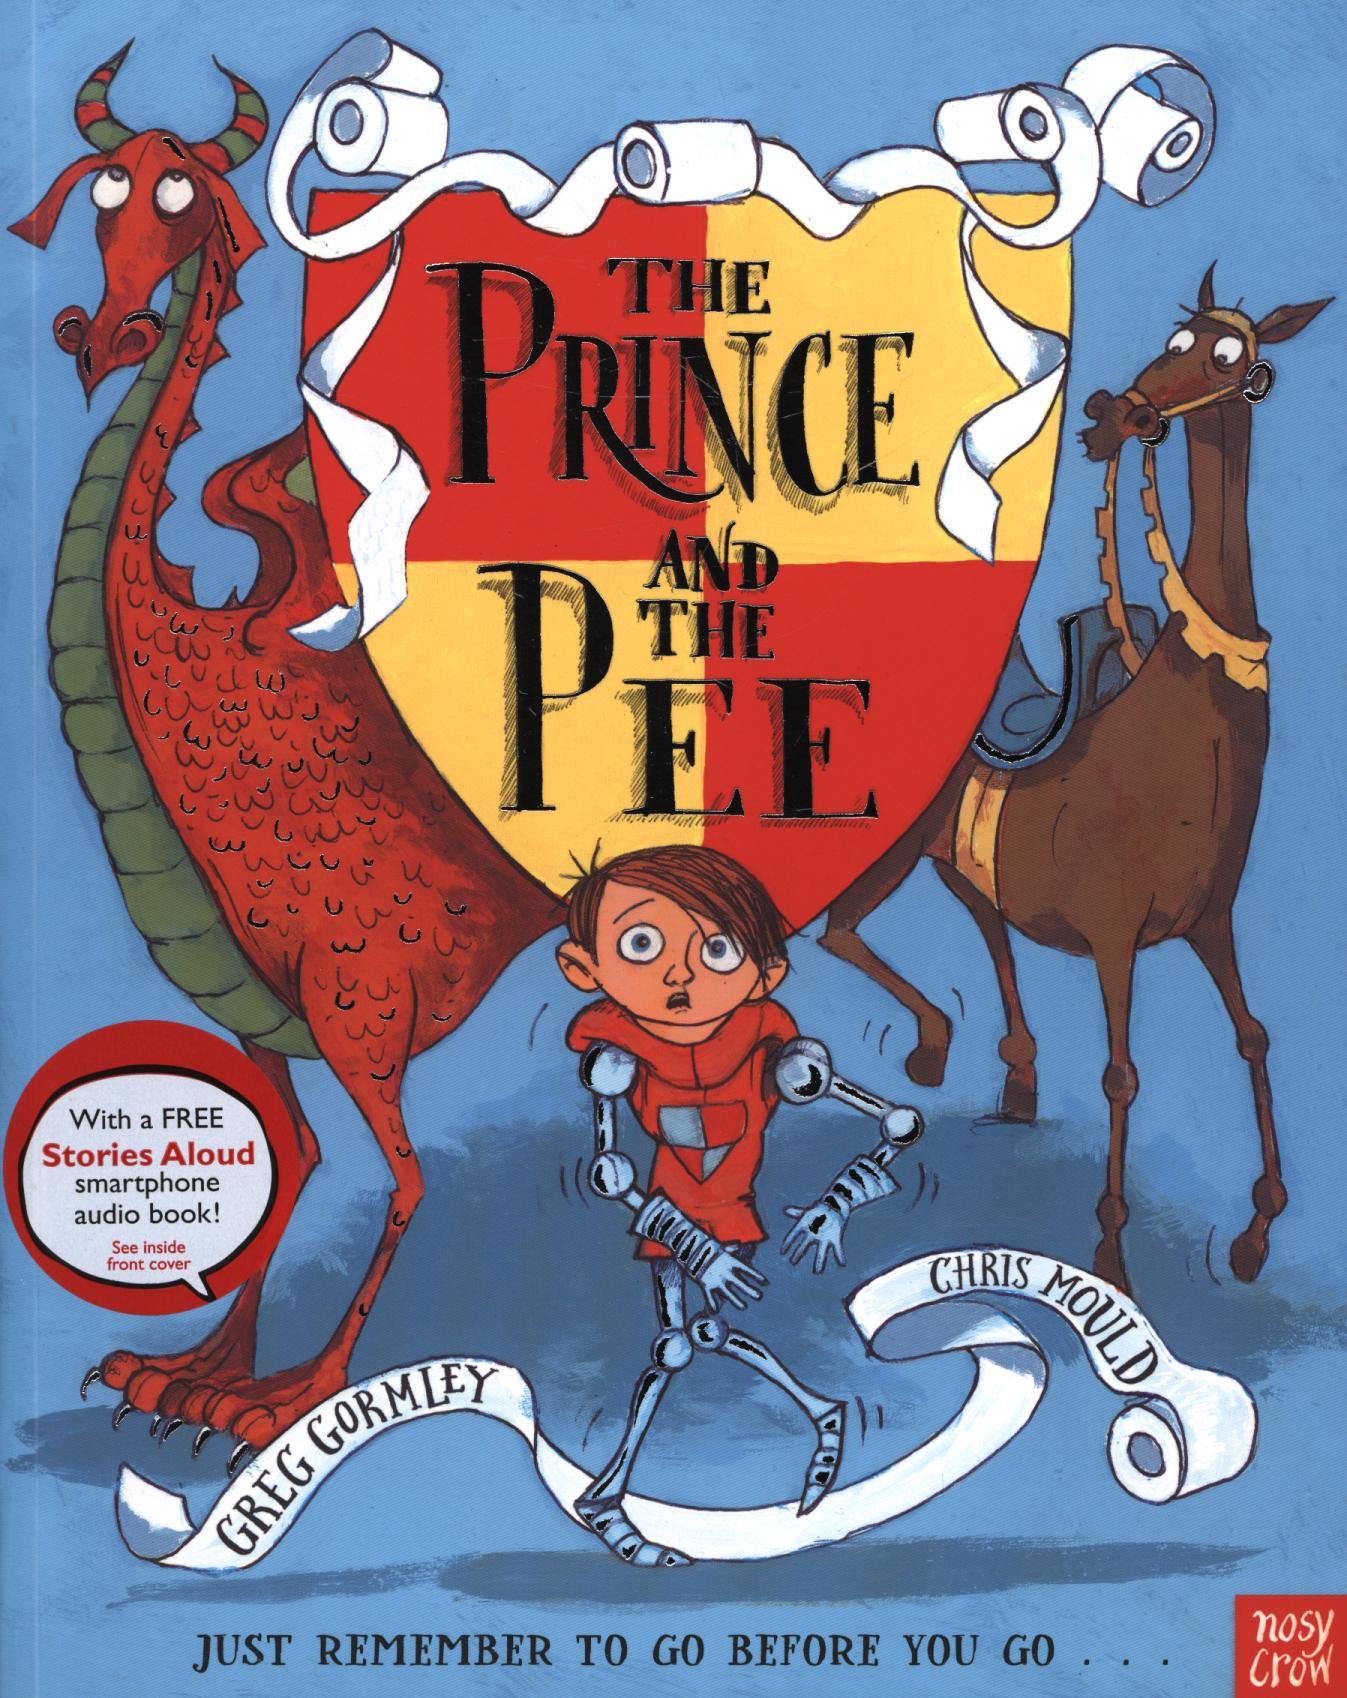 Prince and the Pee